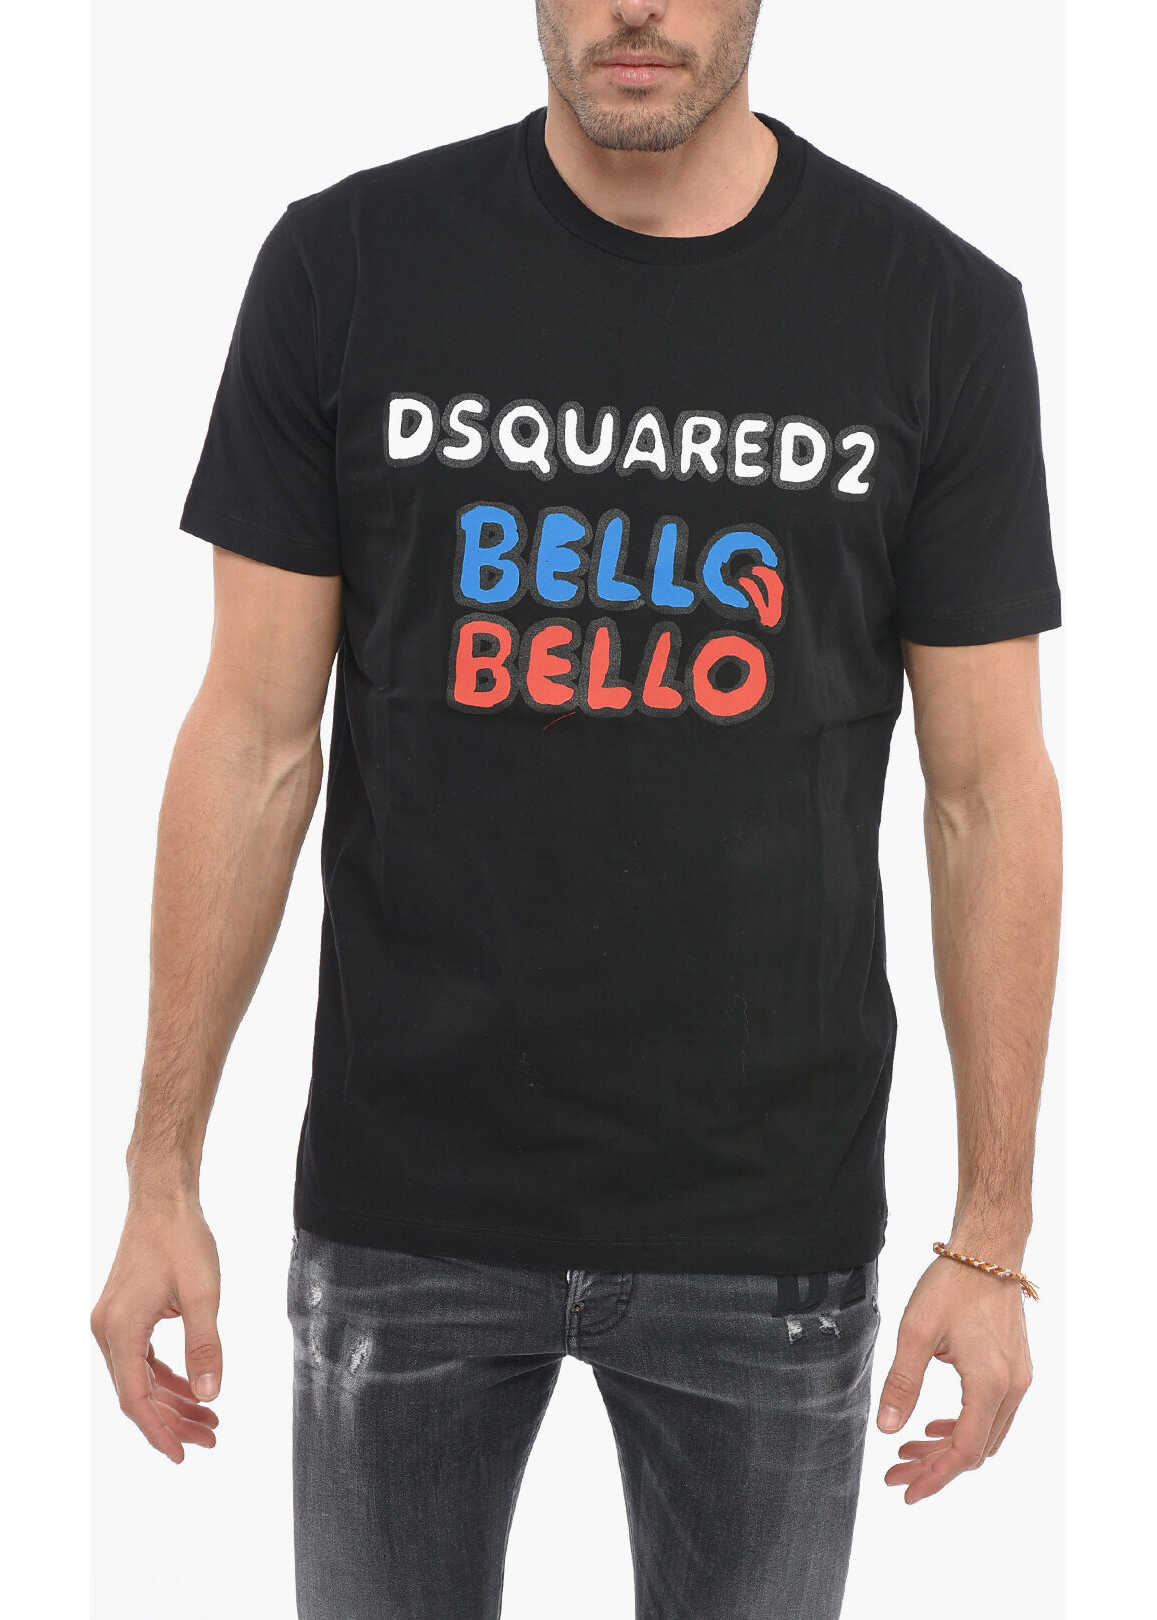 DSQUARED2 Crew Neck Bello Bello Paint Printed T-Shirt Black